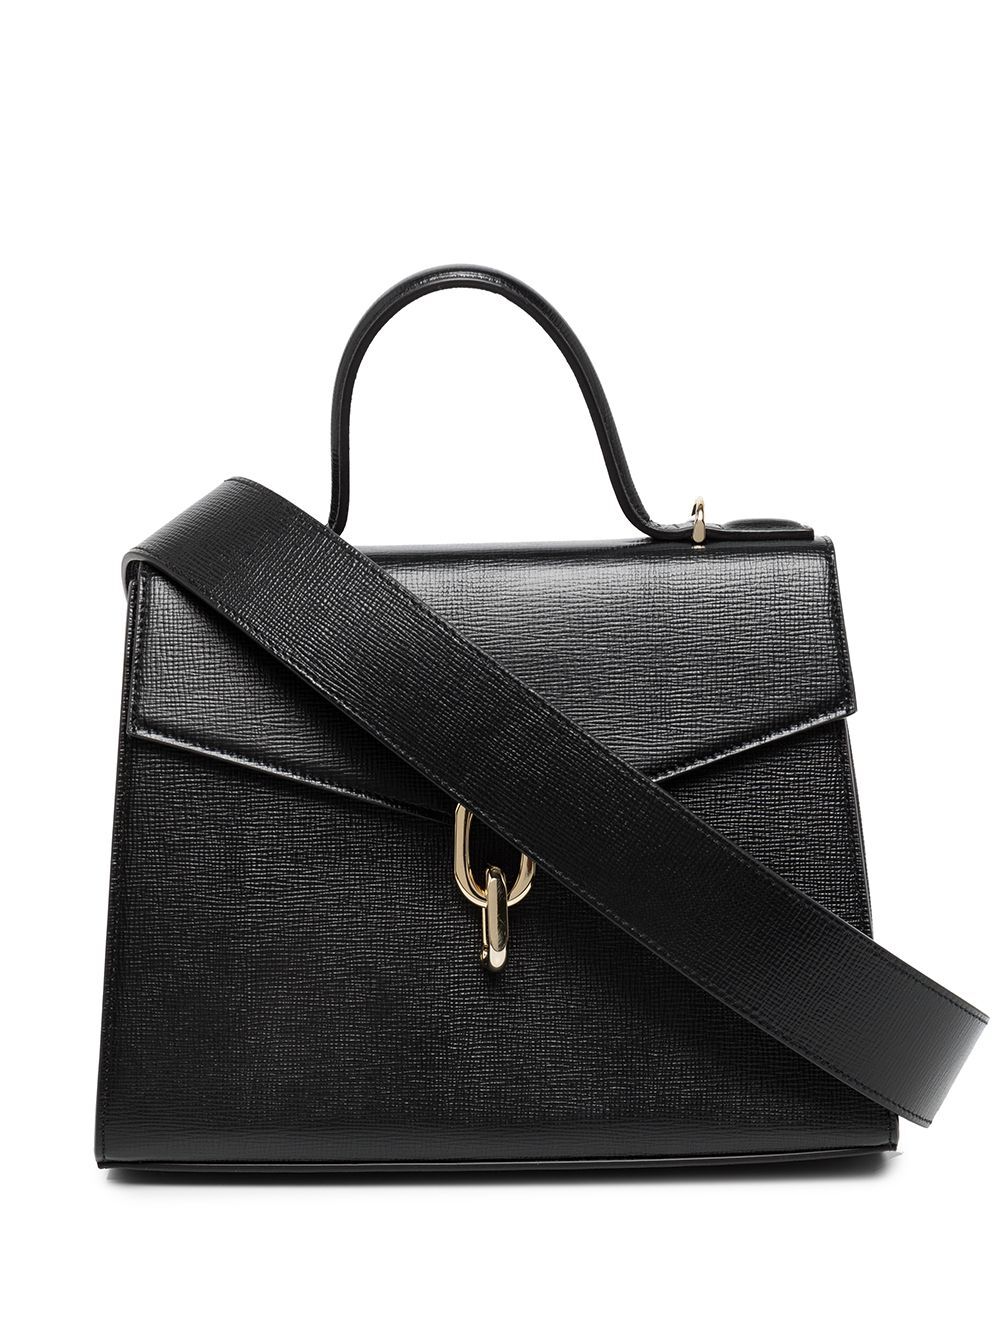 ANINE BING Dana leather tote bag - Black